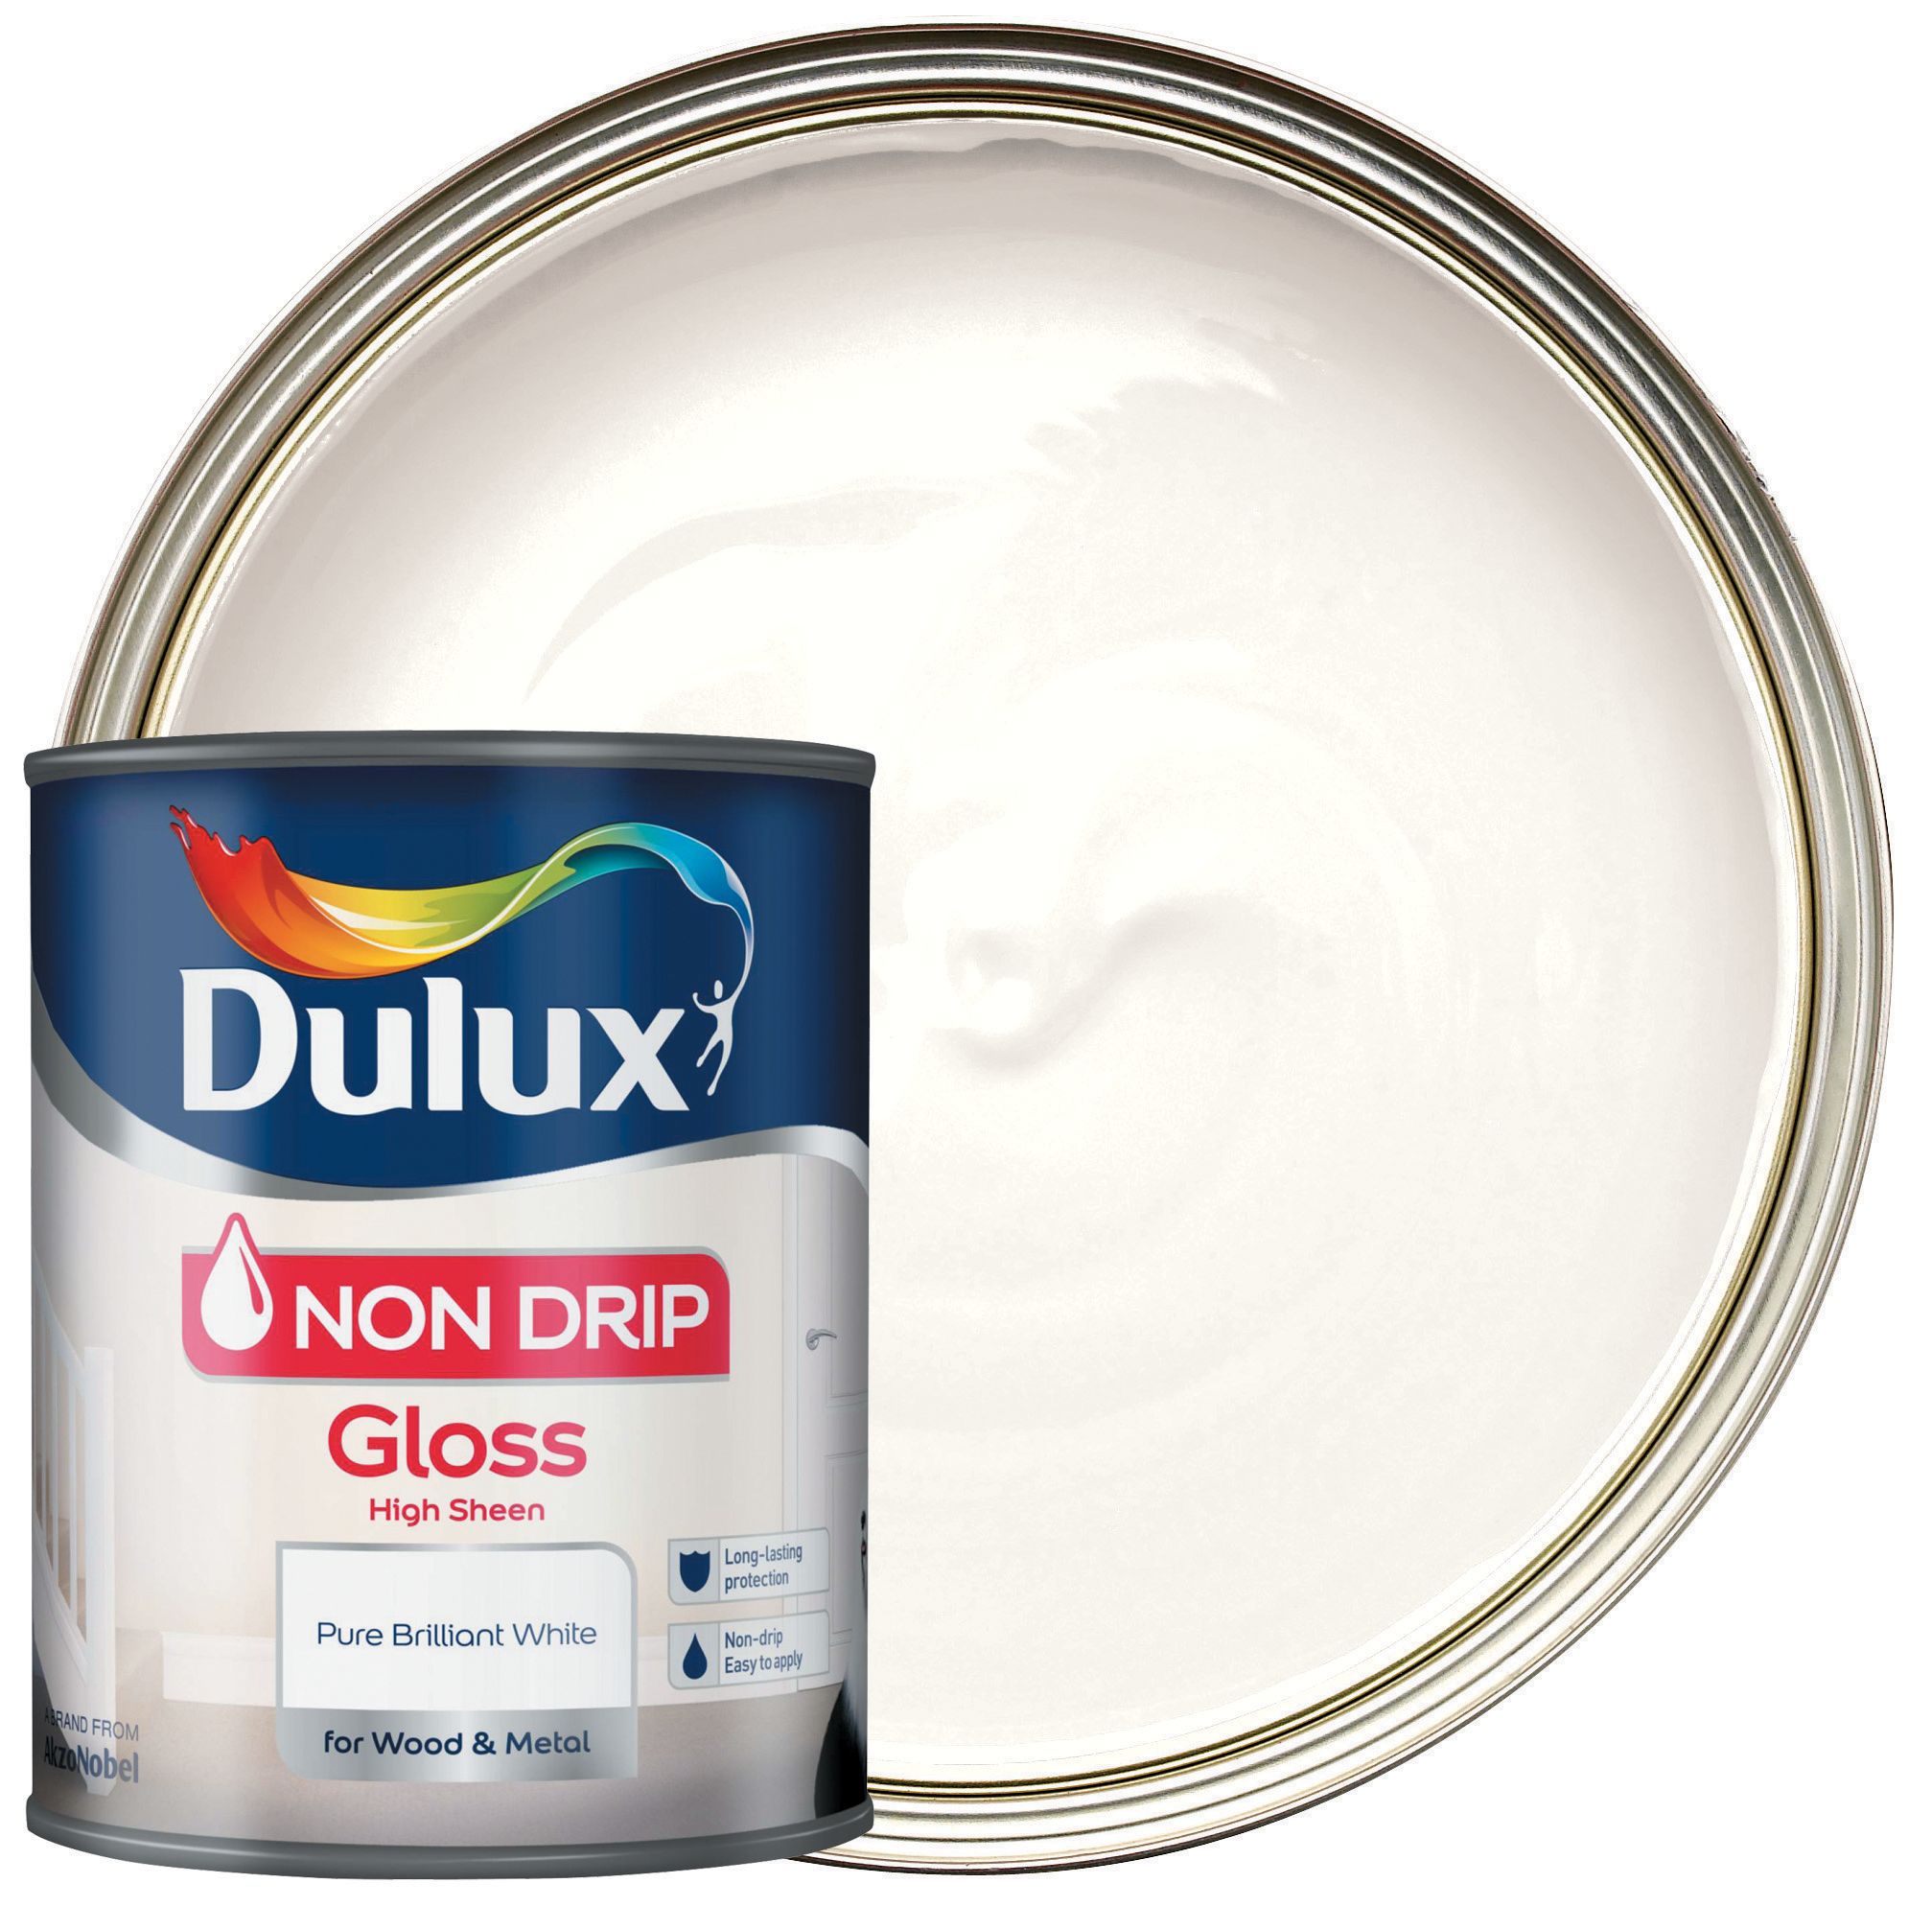 Dulux Non Drip Gloss Paint - Pure Brilliant White - 750ml